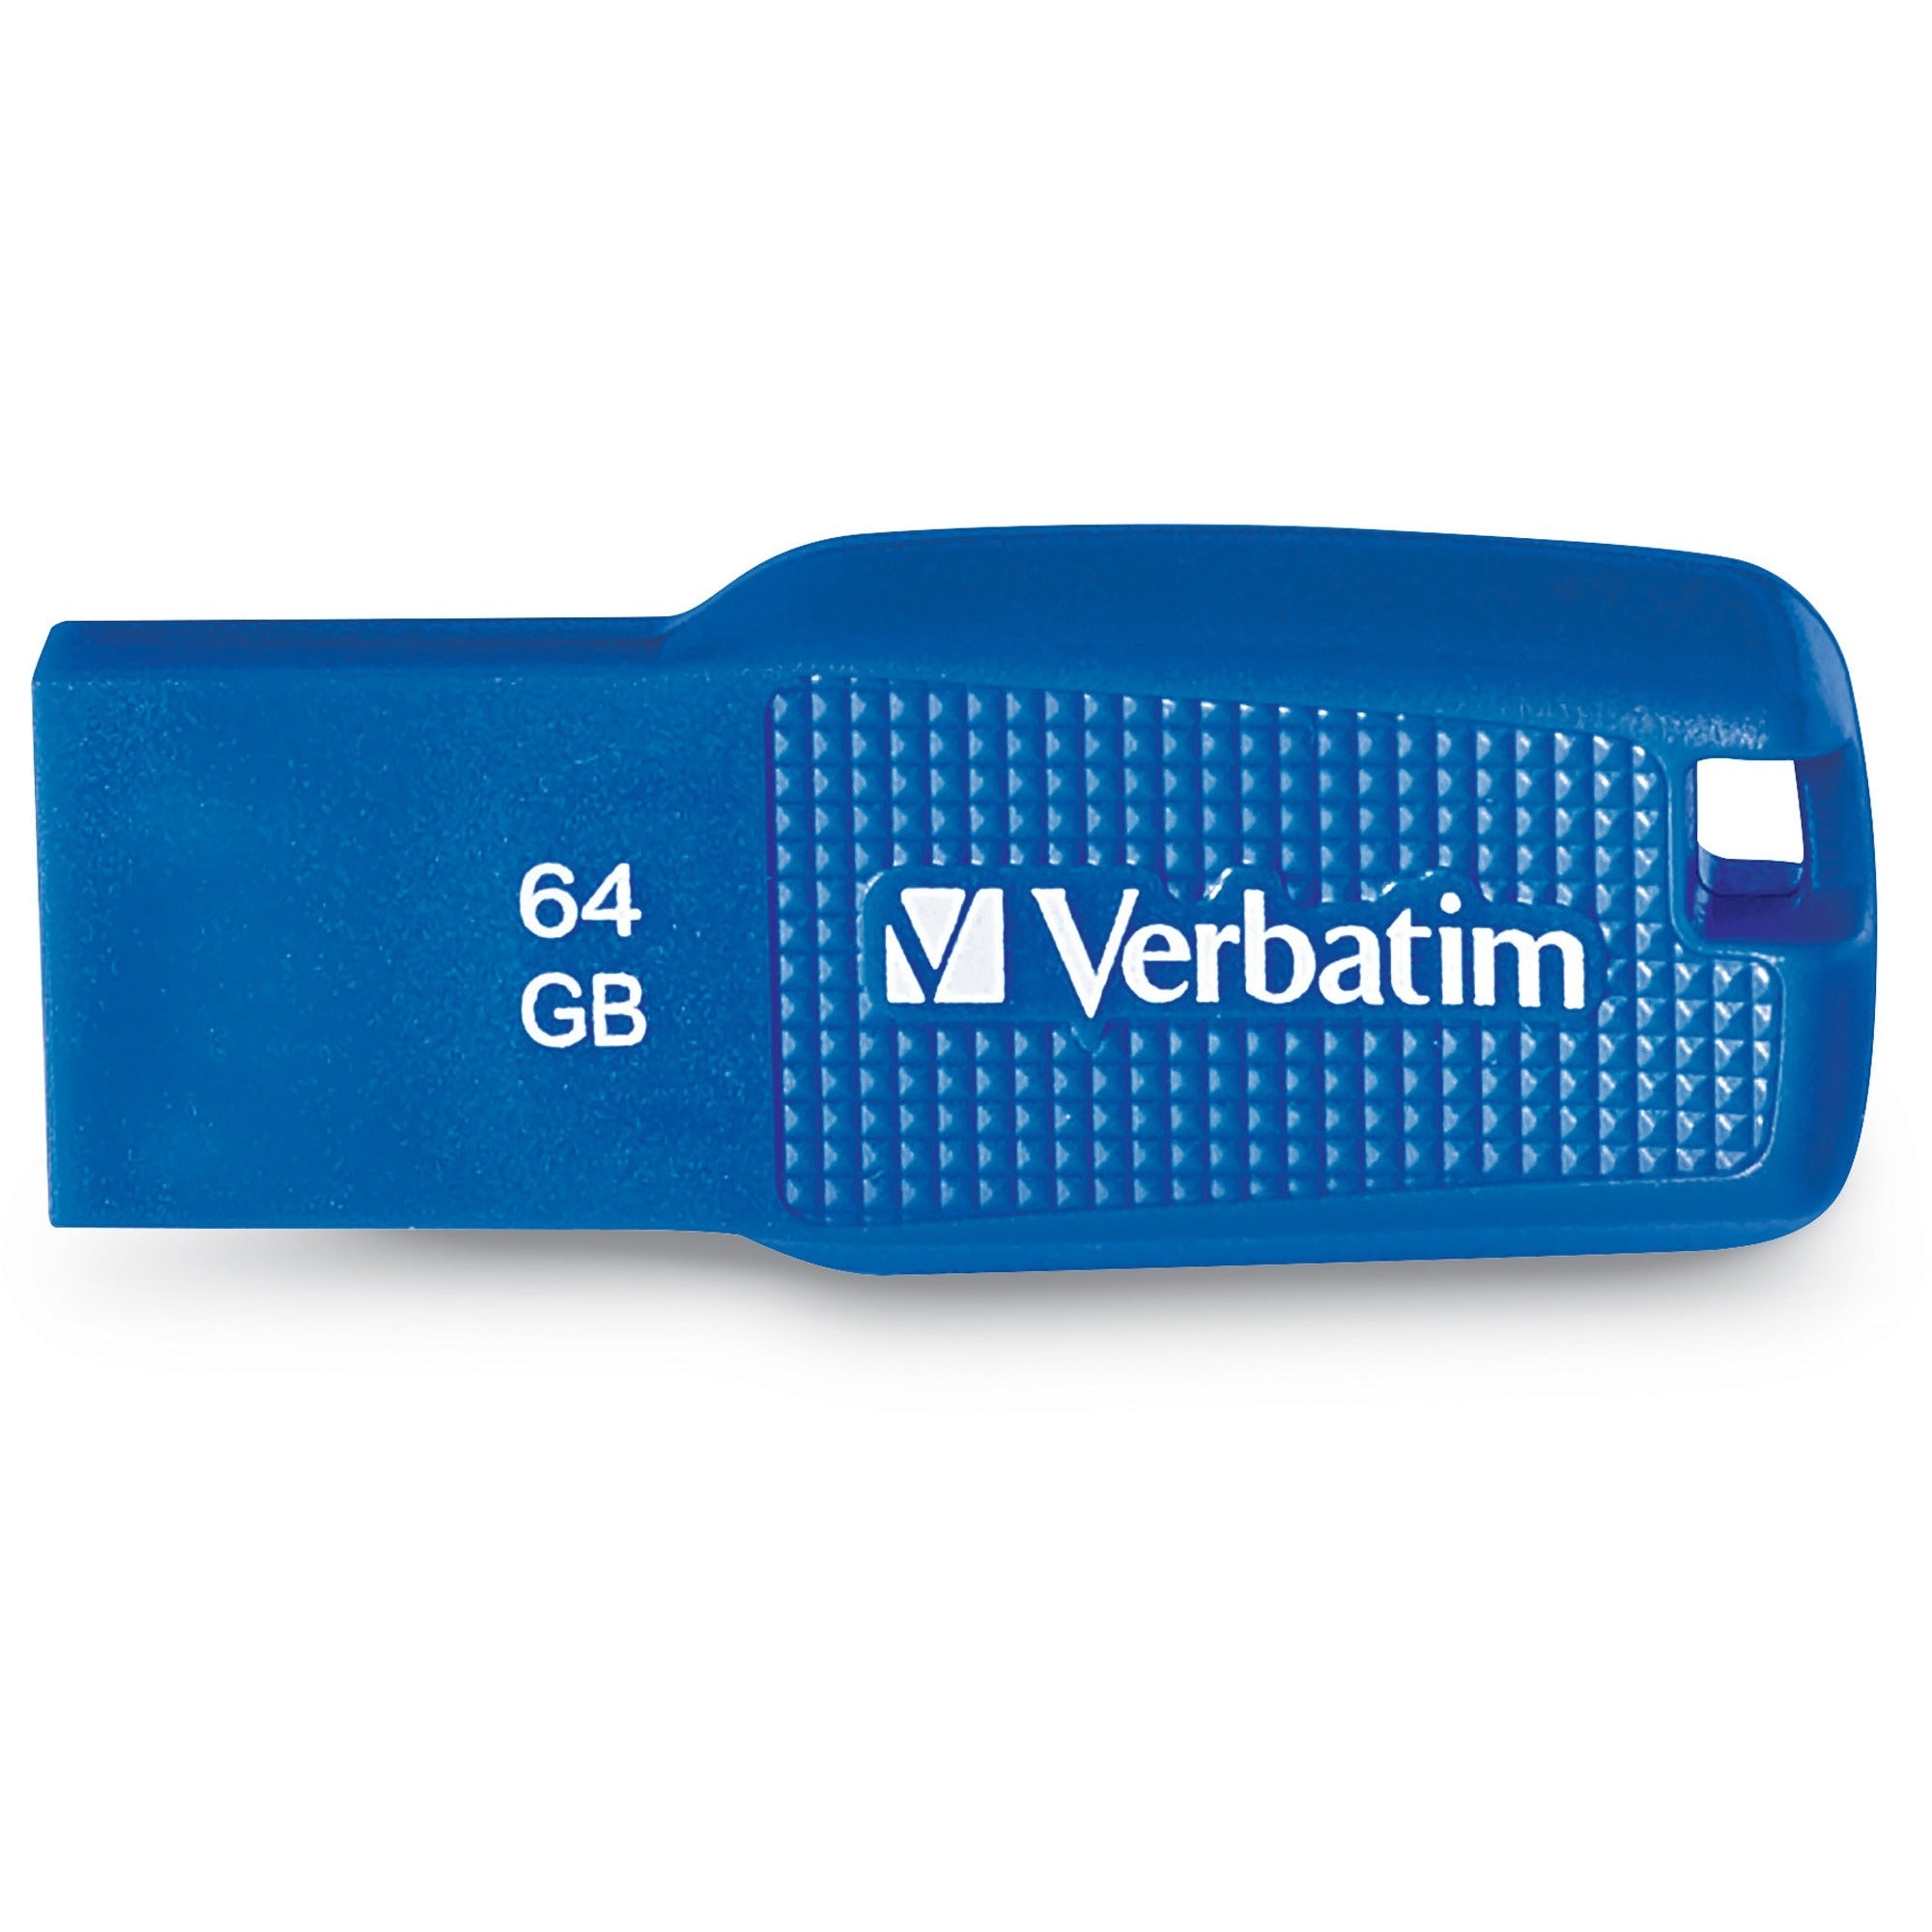 Verbatim 64GB Ergo USB 3.0 Flash Drive - Blue - The Verbatim Ergo USB drive features an ergonomic design for in-hand comfort and COB design for enhanced reliability. - 2